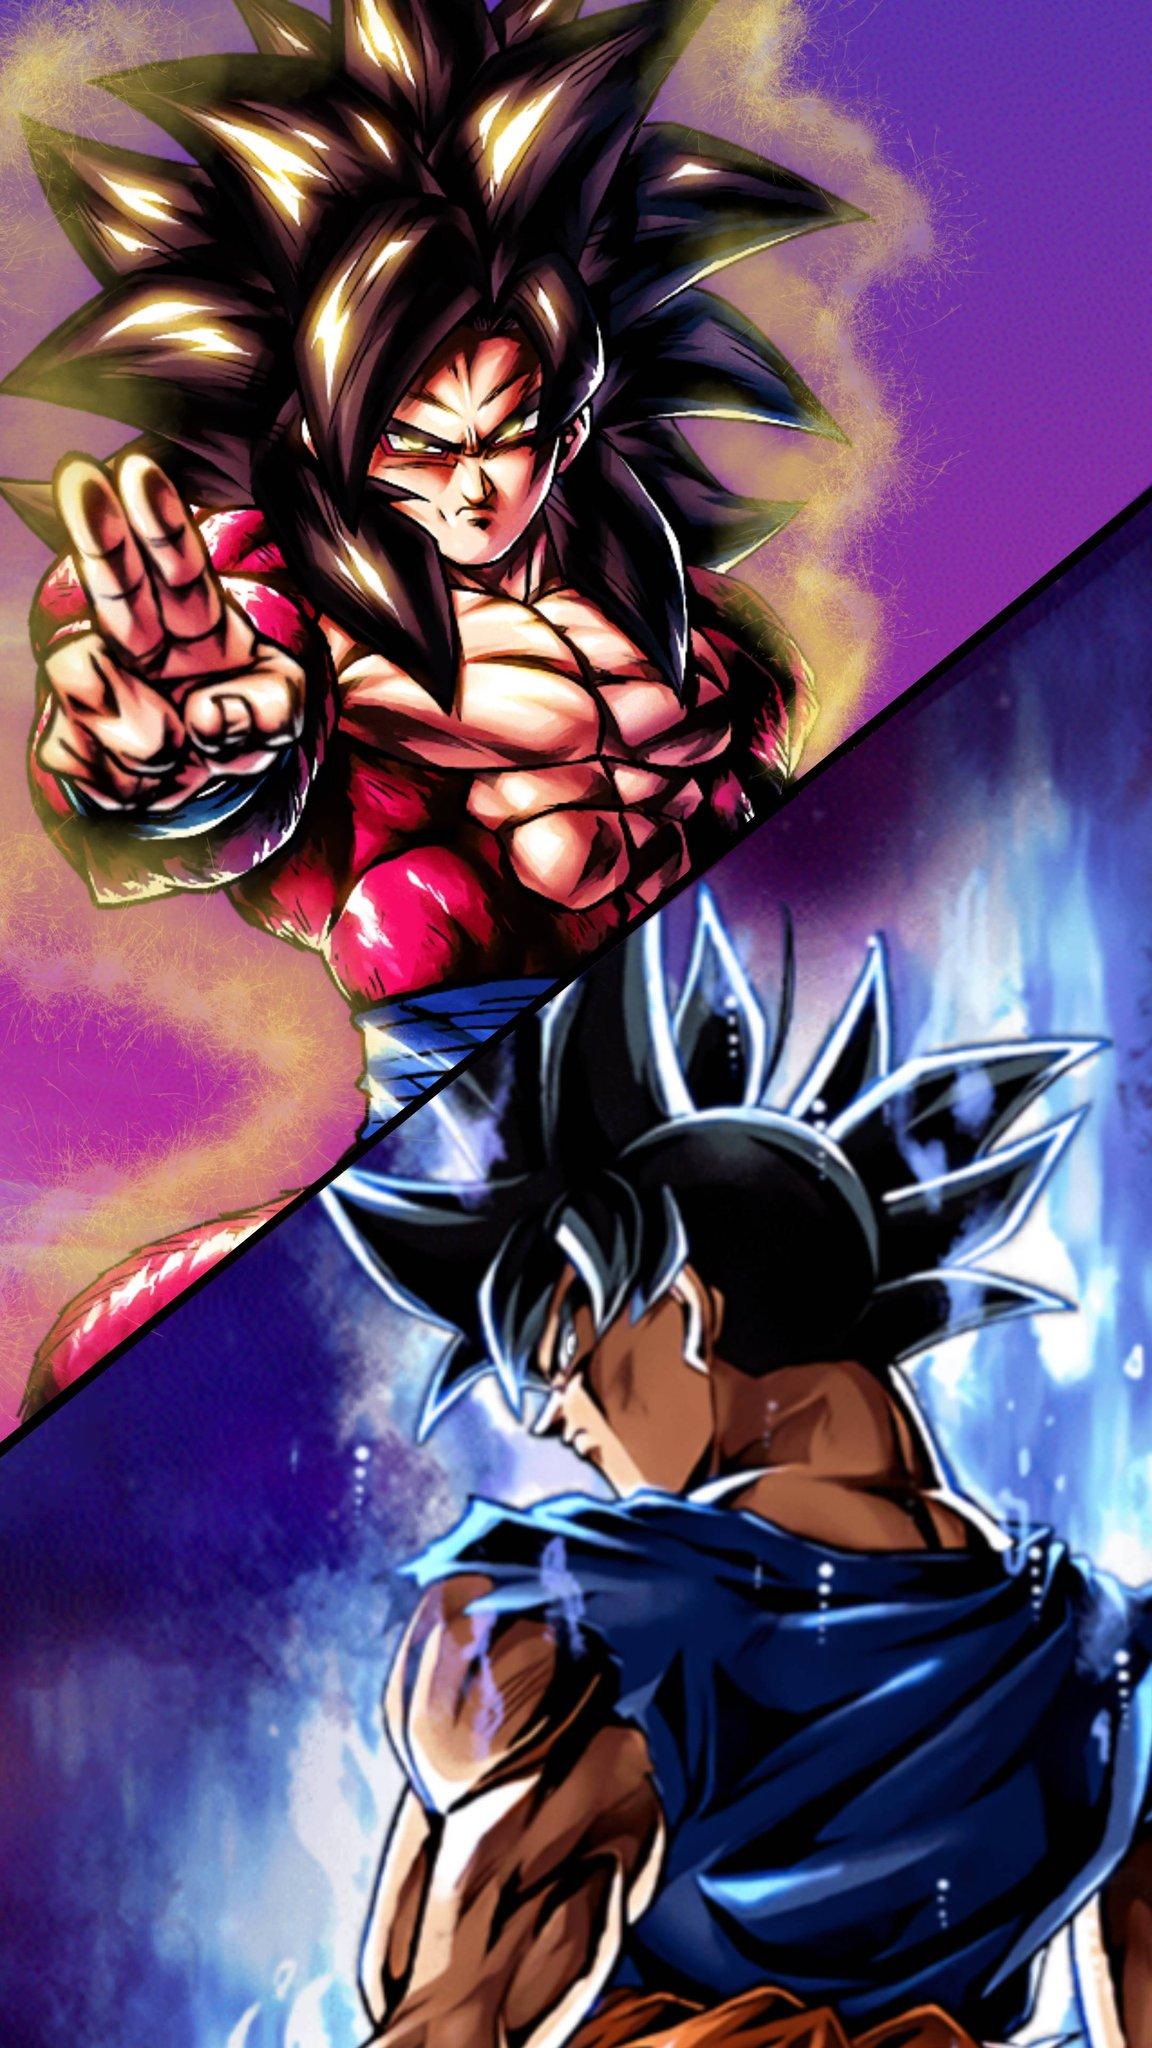 Xeno Goku SSJ4 VS Goku Blue Anime SDBH by WindyEchoes on DeviantArt